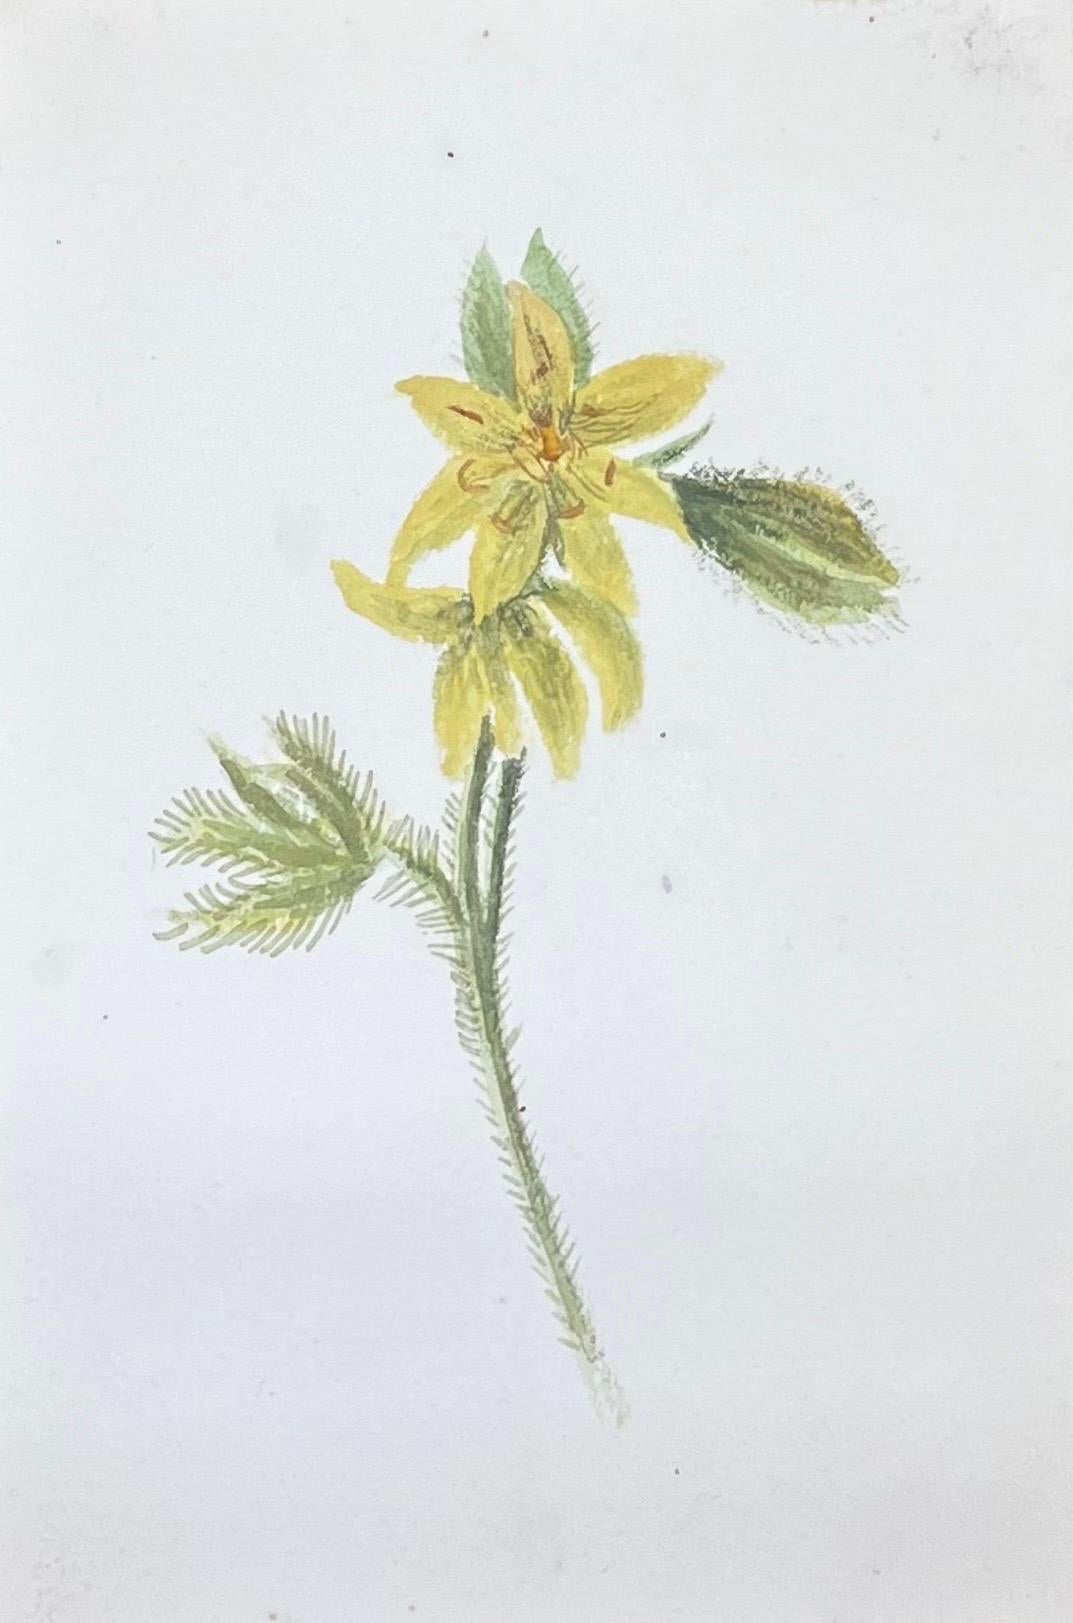 Still-Life Caroline Worsley - Fine peinture botanique britannique ancienne à l'aquarelle, peinture de lysimachia jaune